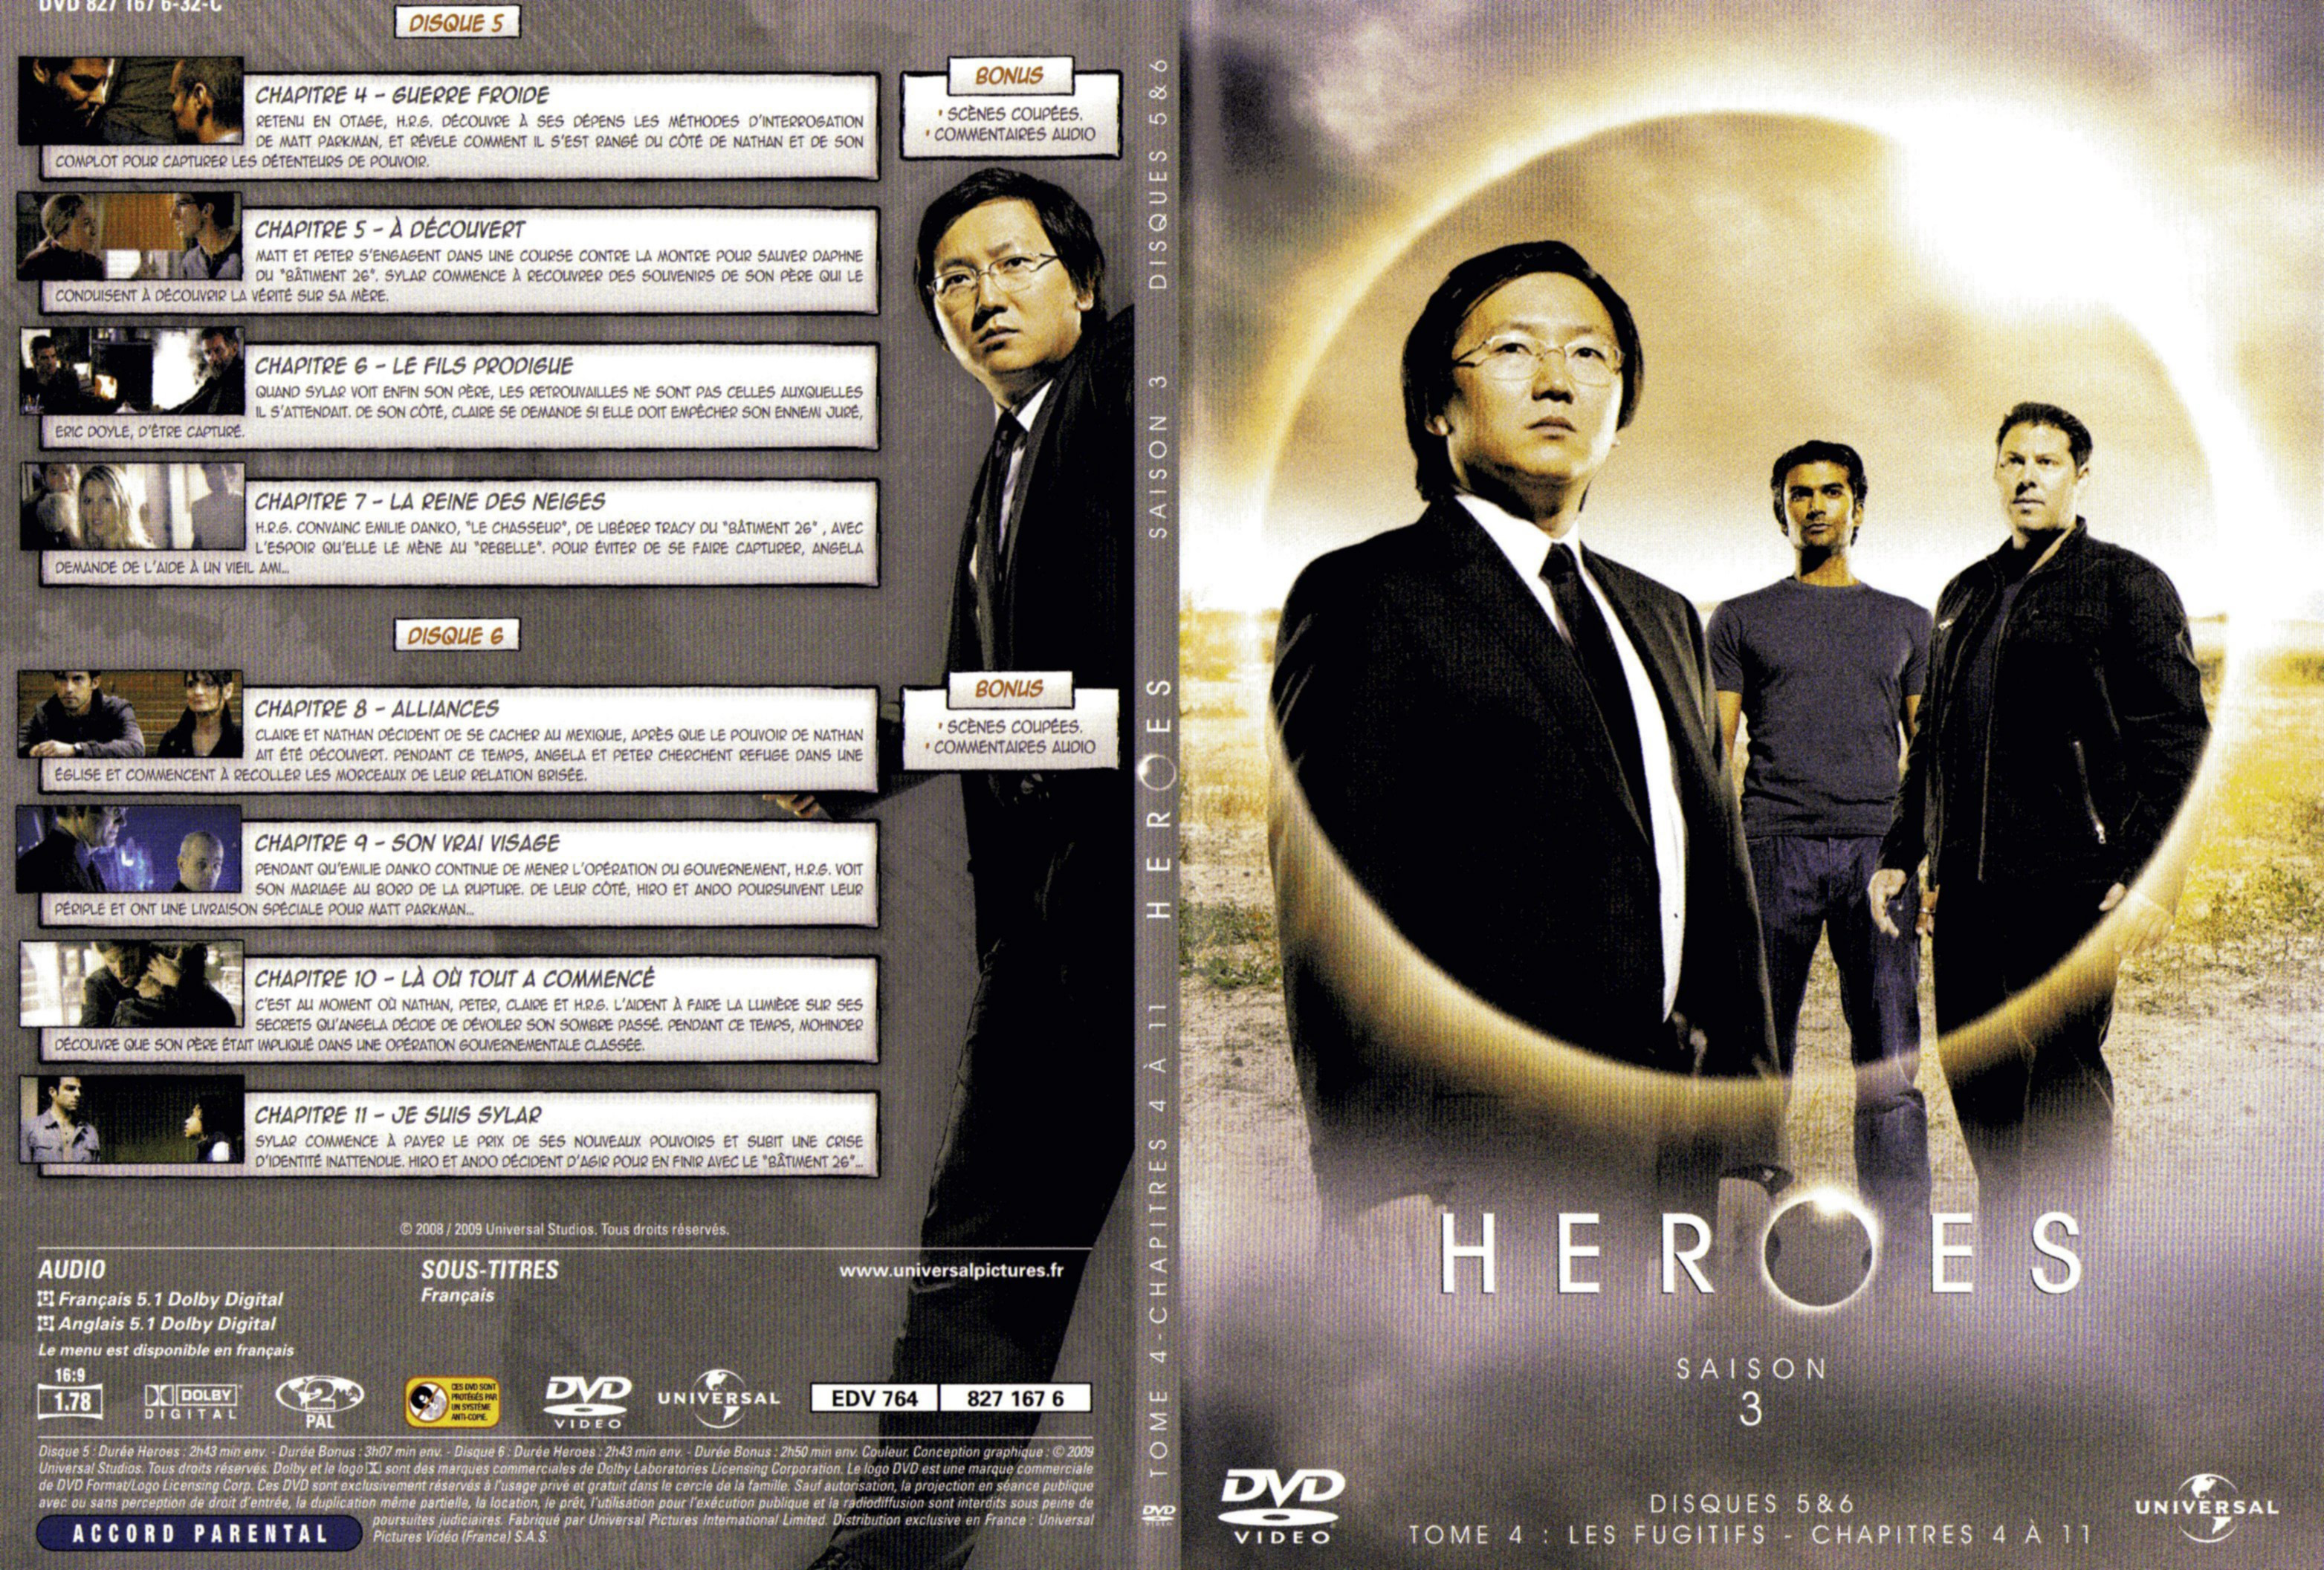 Jaquette DVD Heroes saison 3 DVD 3